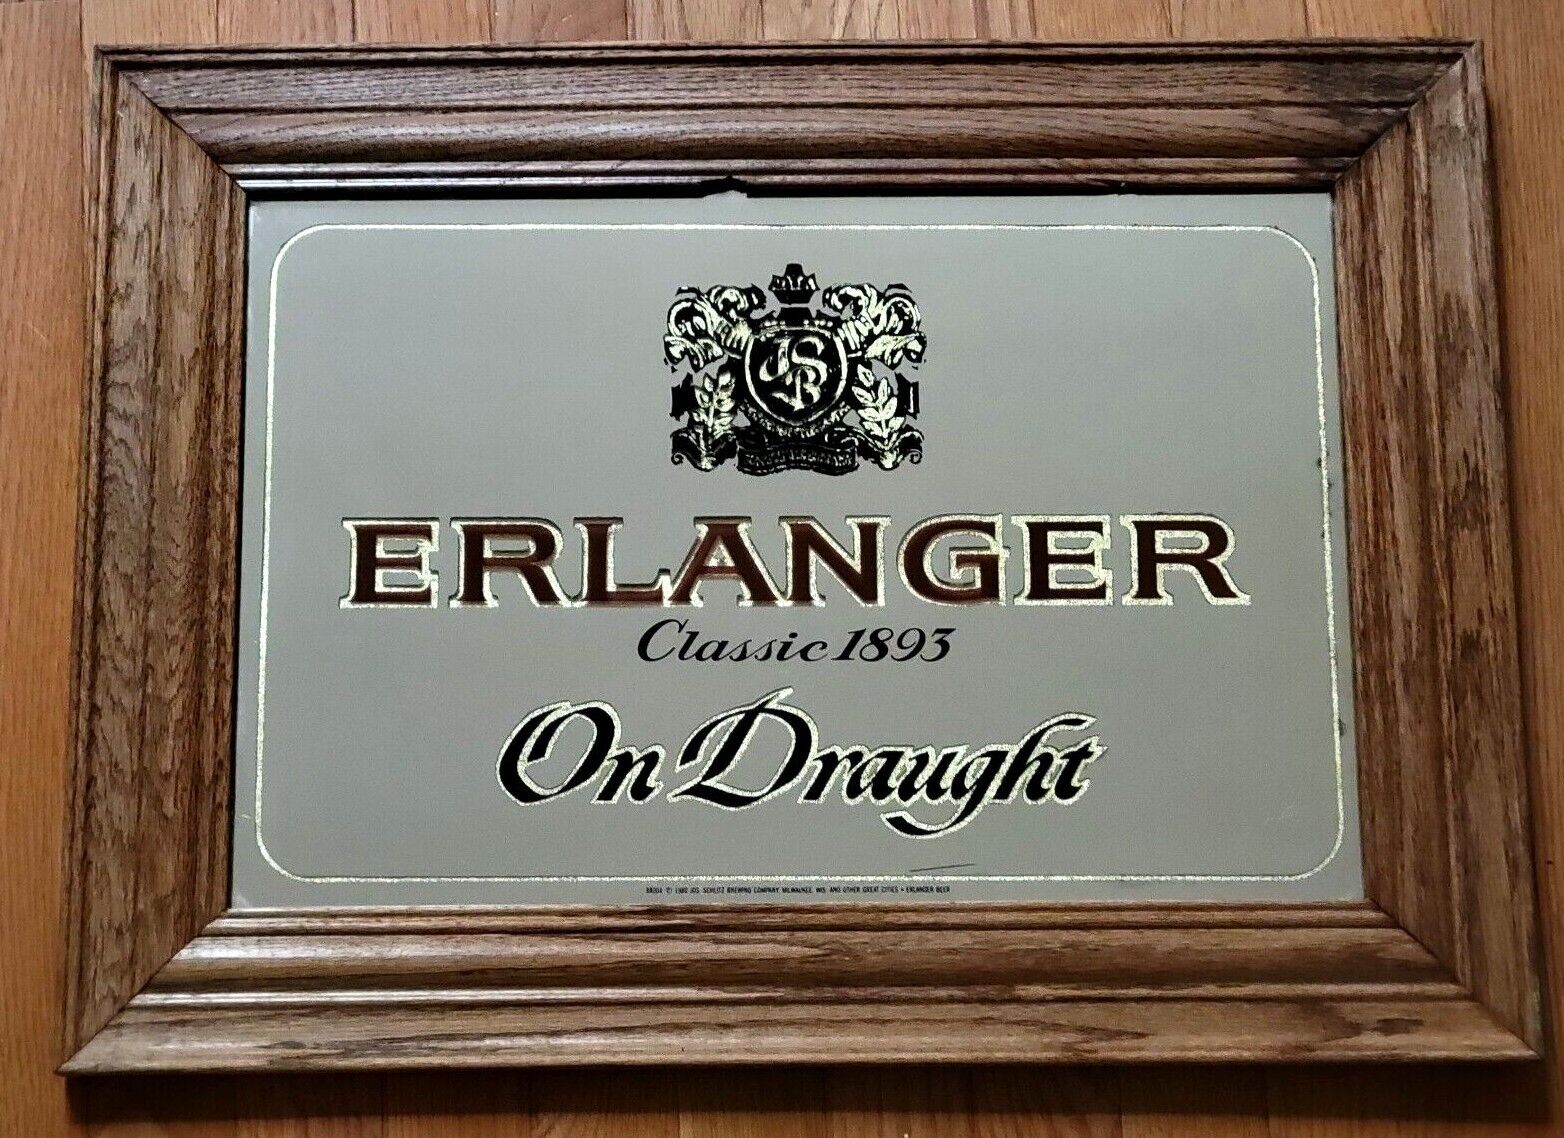 Vintage Mirror Bar Sign Erlanger On Draught Classic 1893 Beer Advertising Sign 